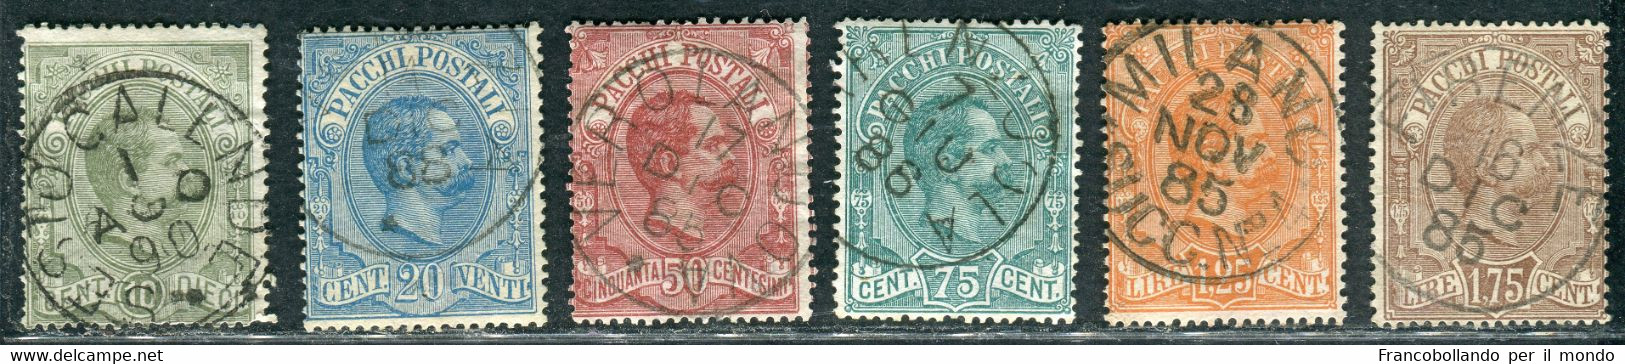 1884/86 Regno D'Italia Pacchi Postali Serie Completa N° S 2100 Usata - Postal Parcels